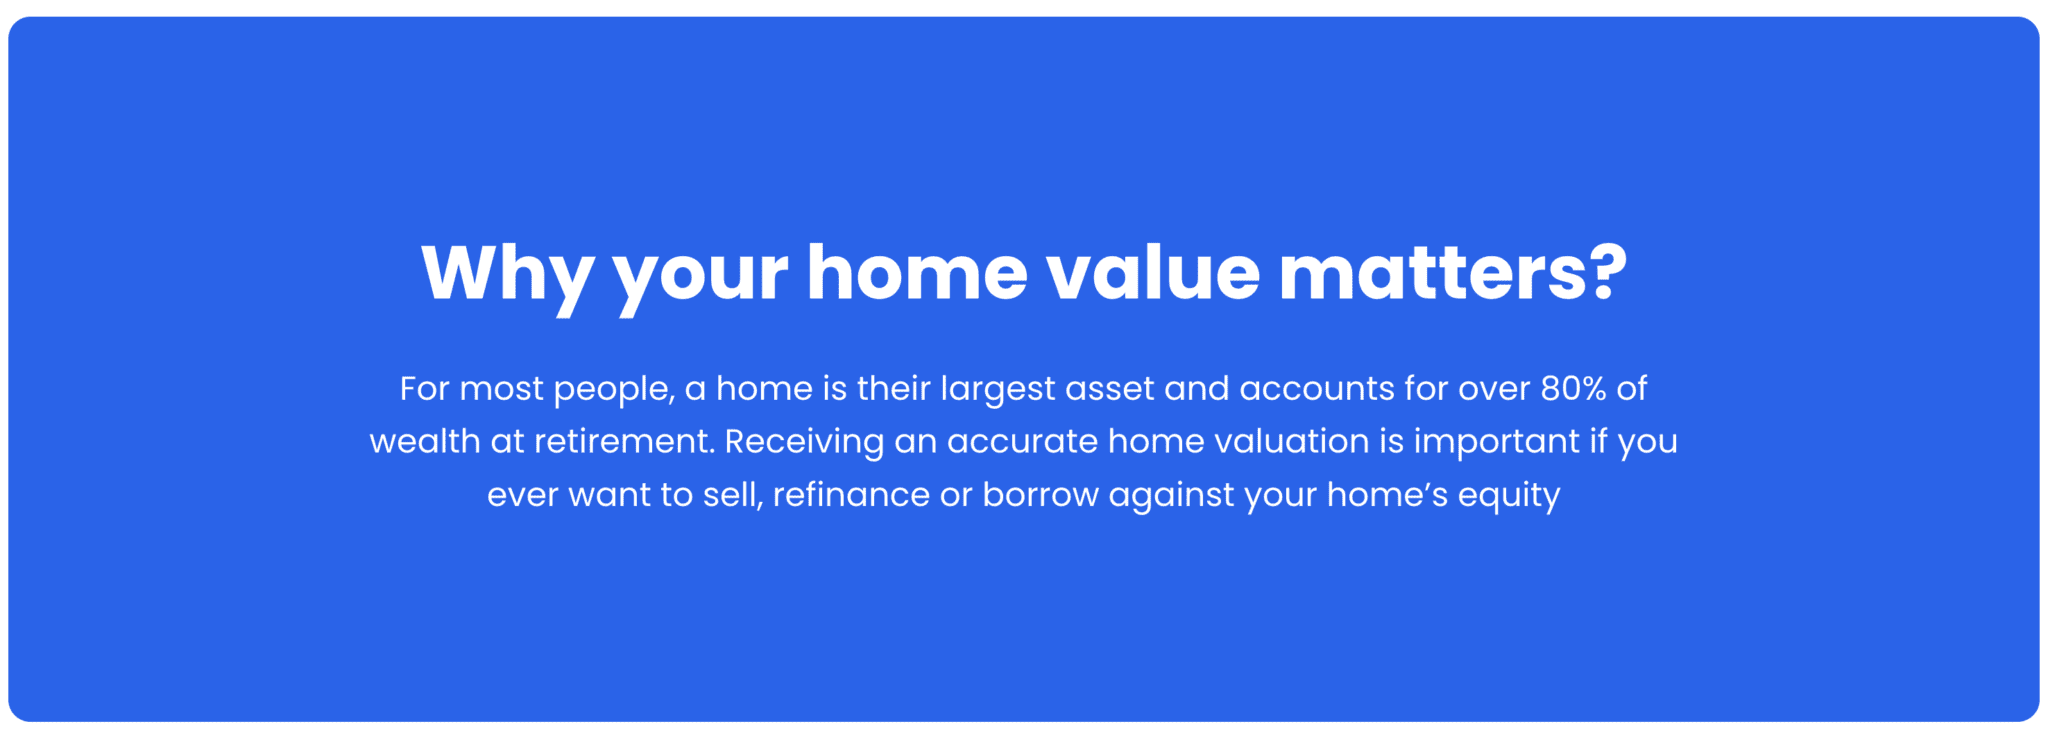 home values matter